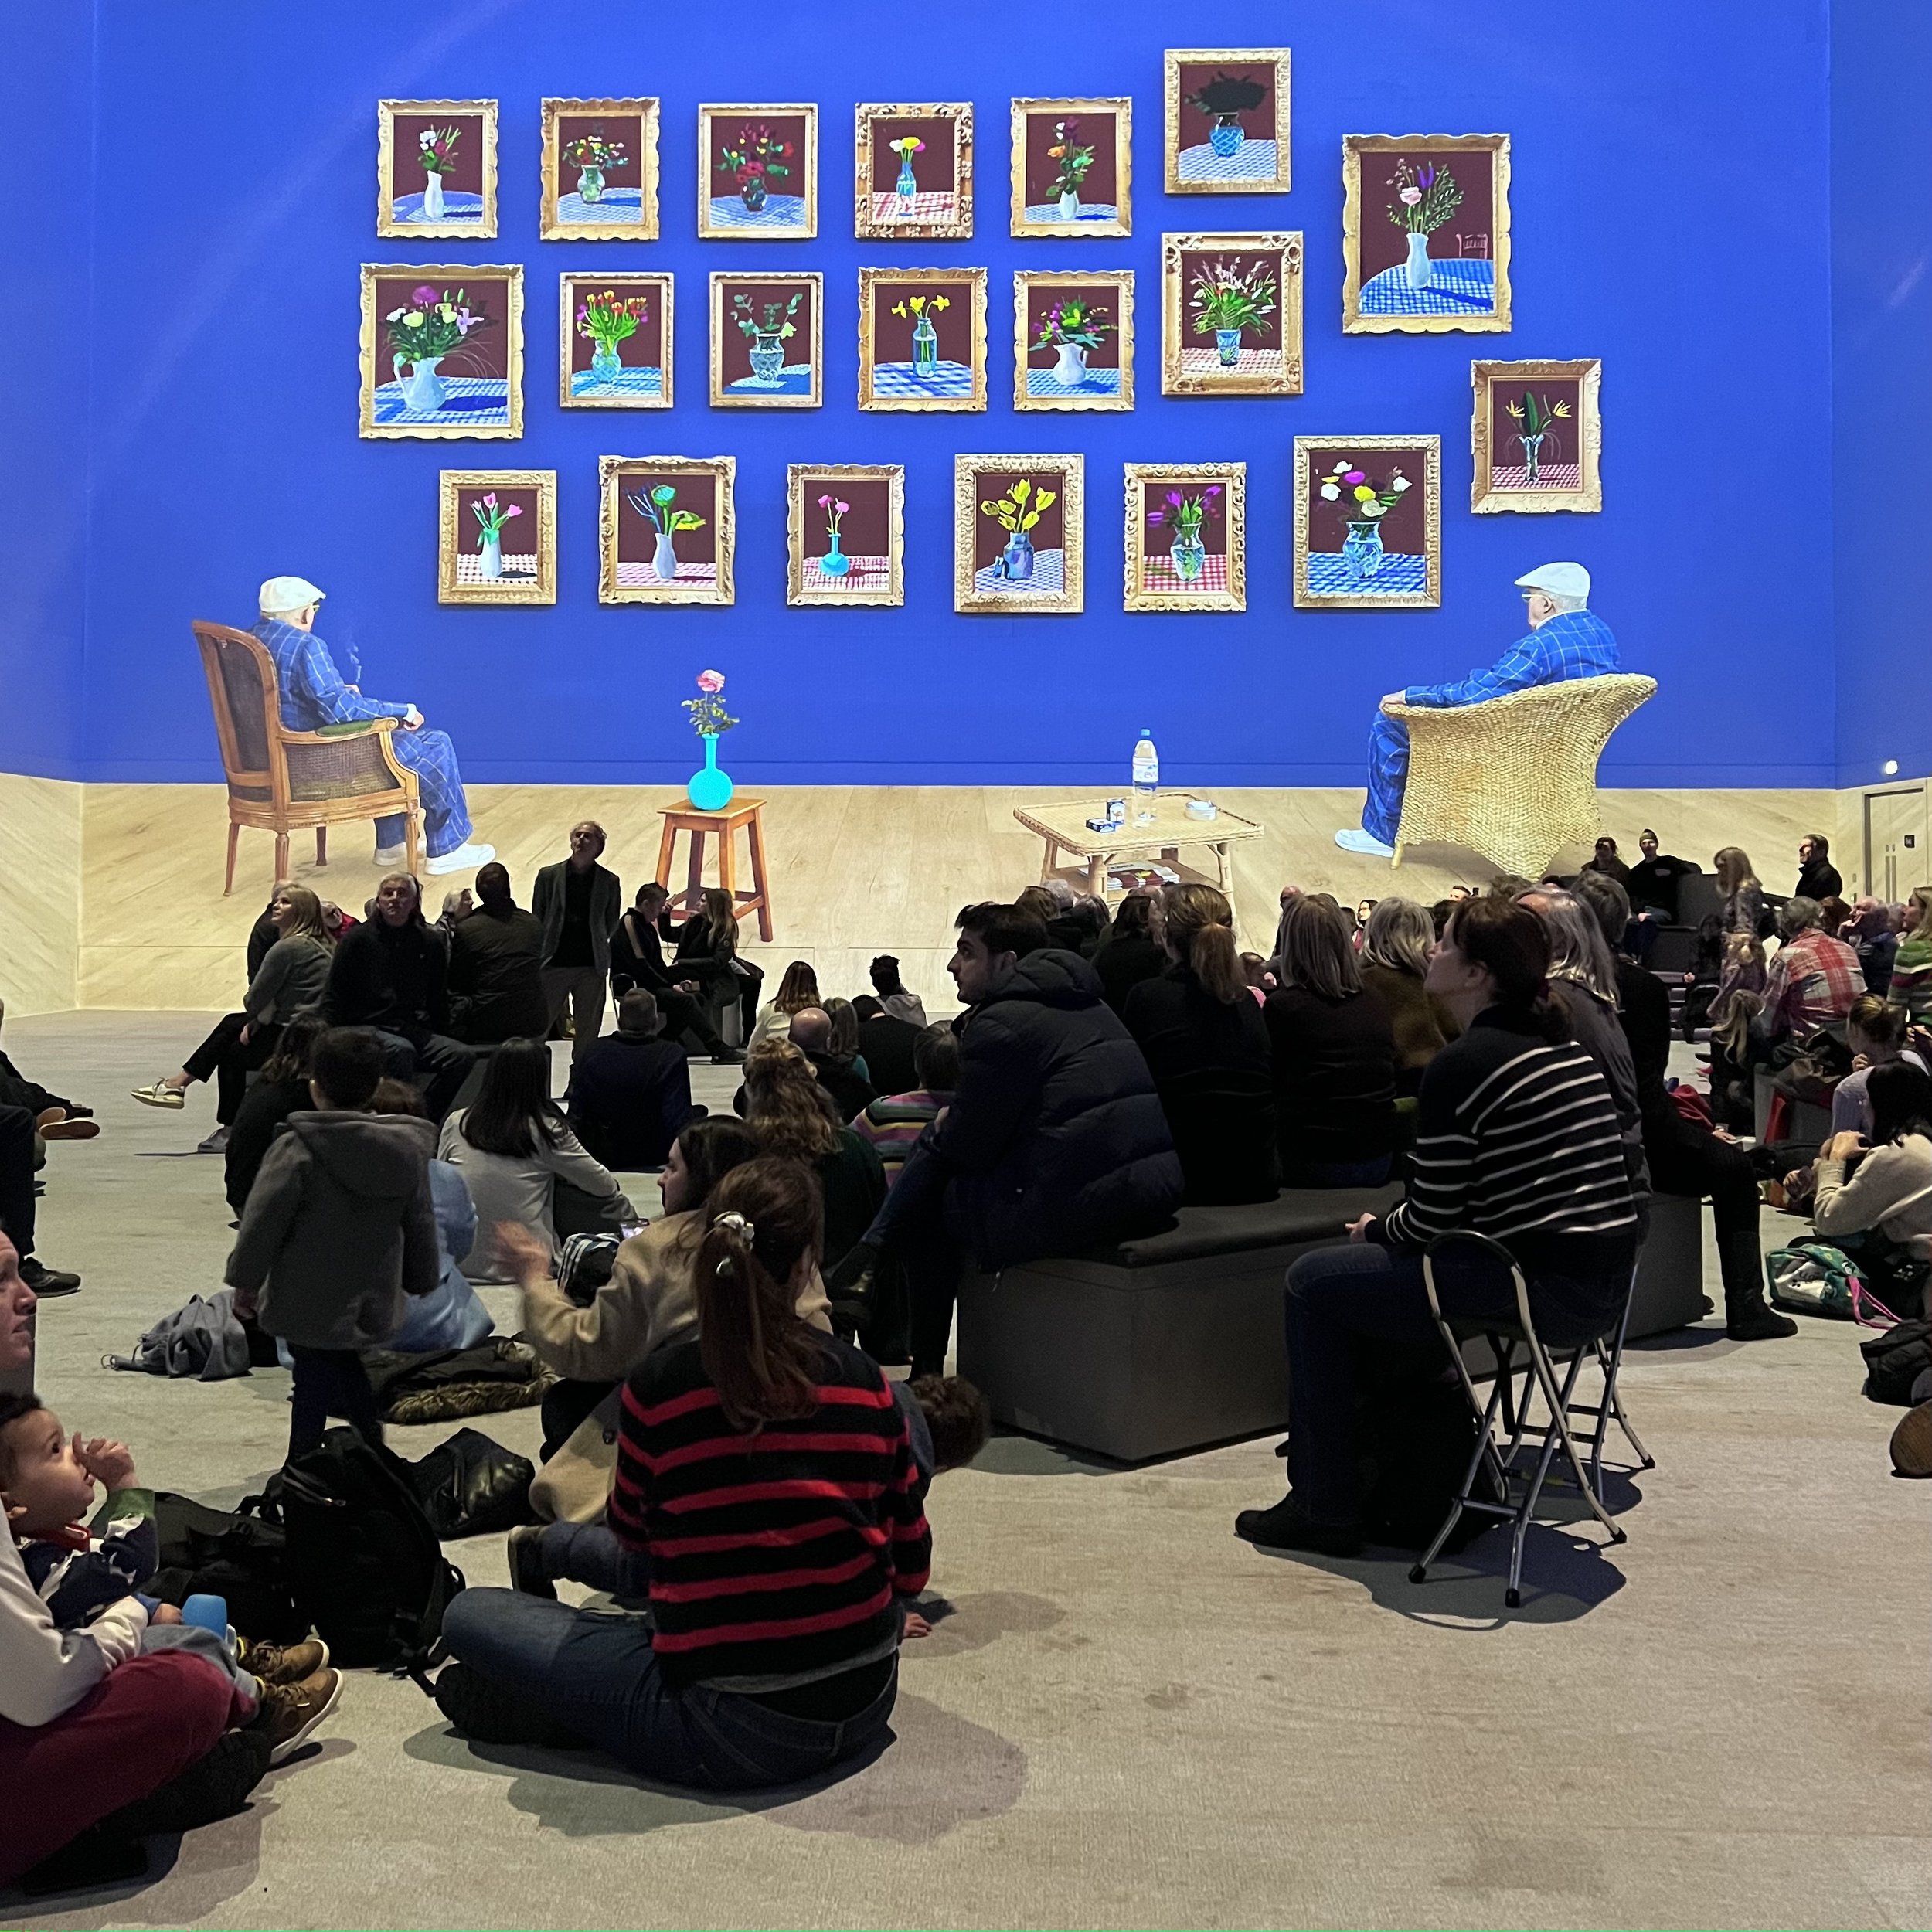 David Hockney Immersive Art Exhibition